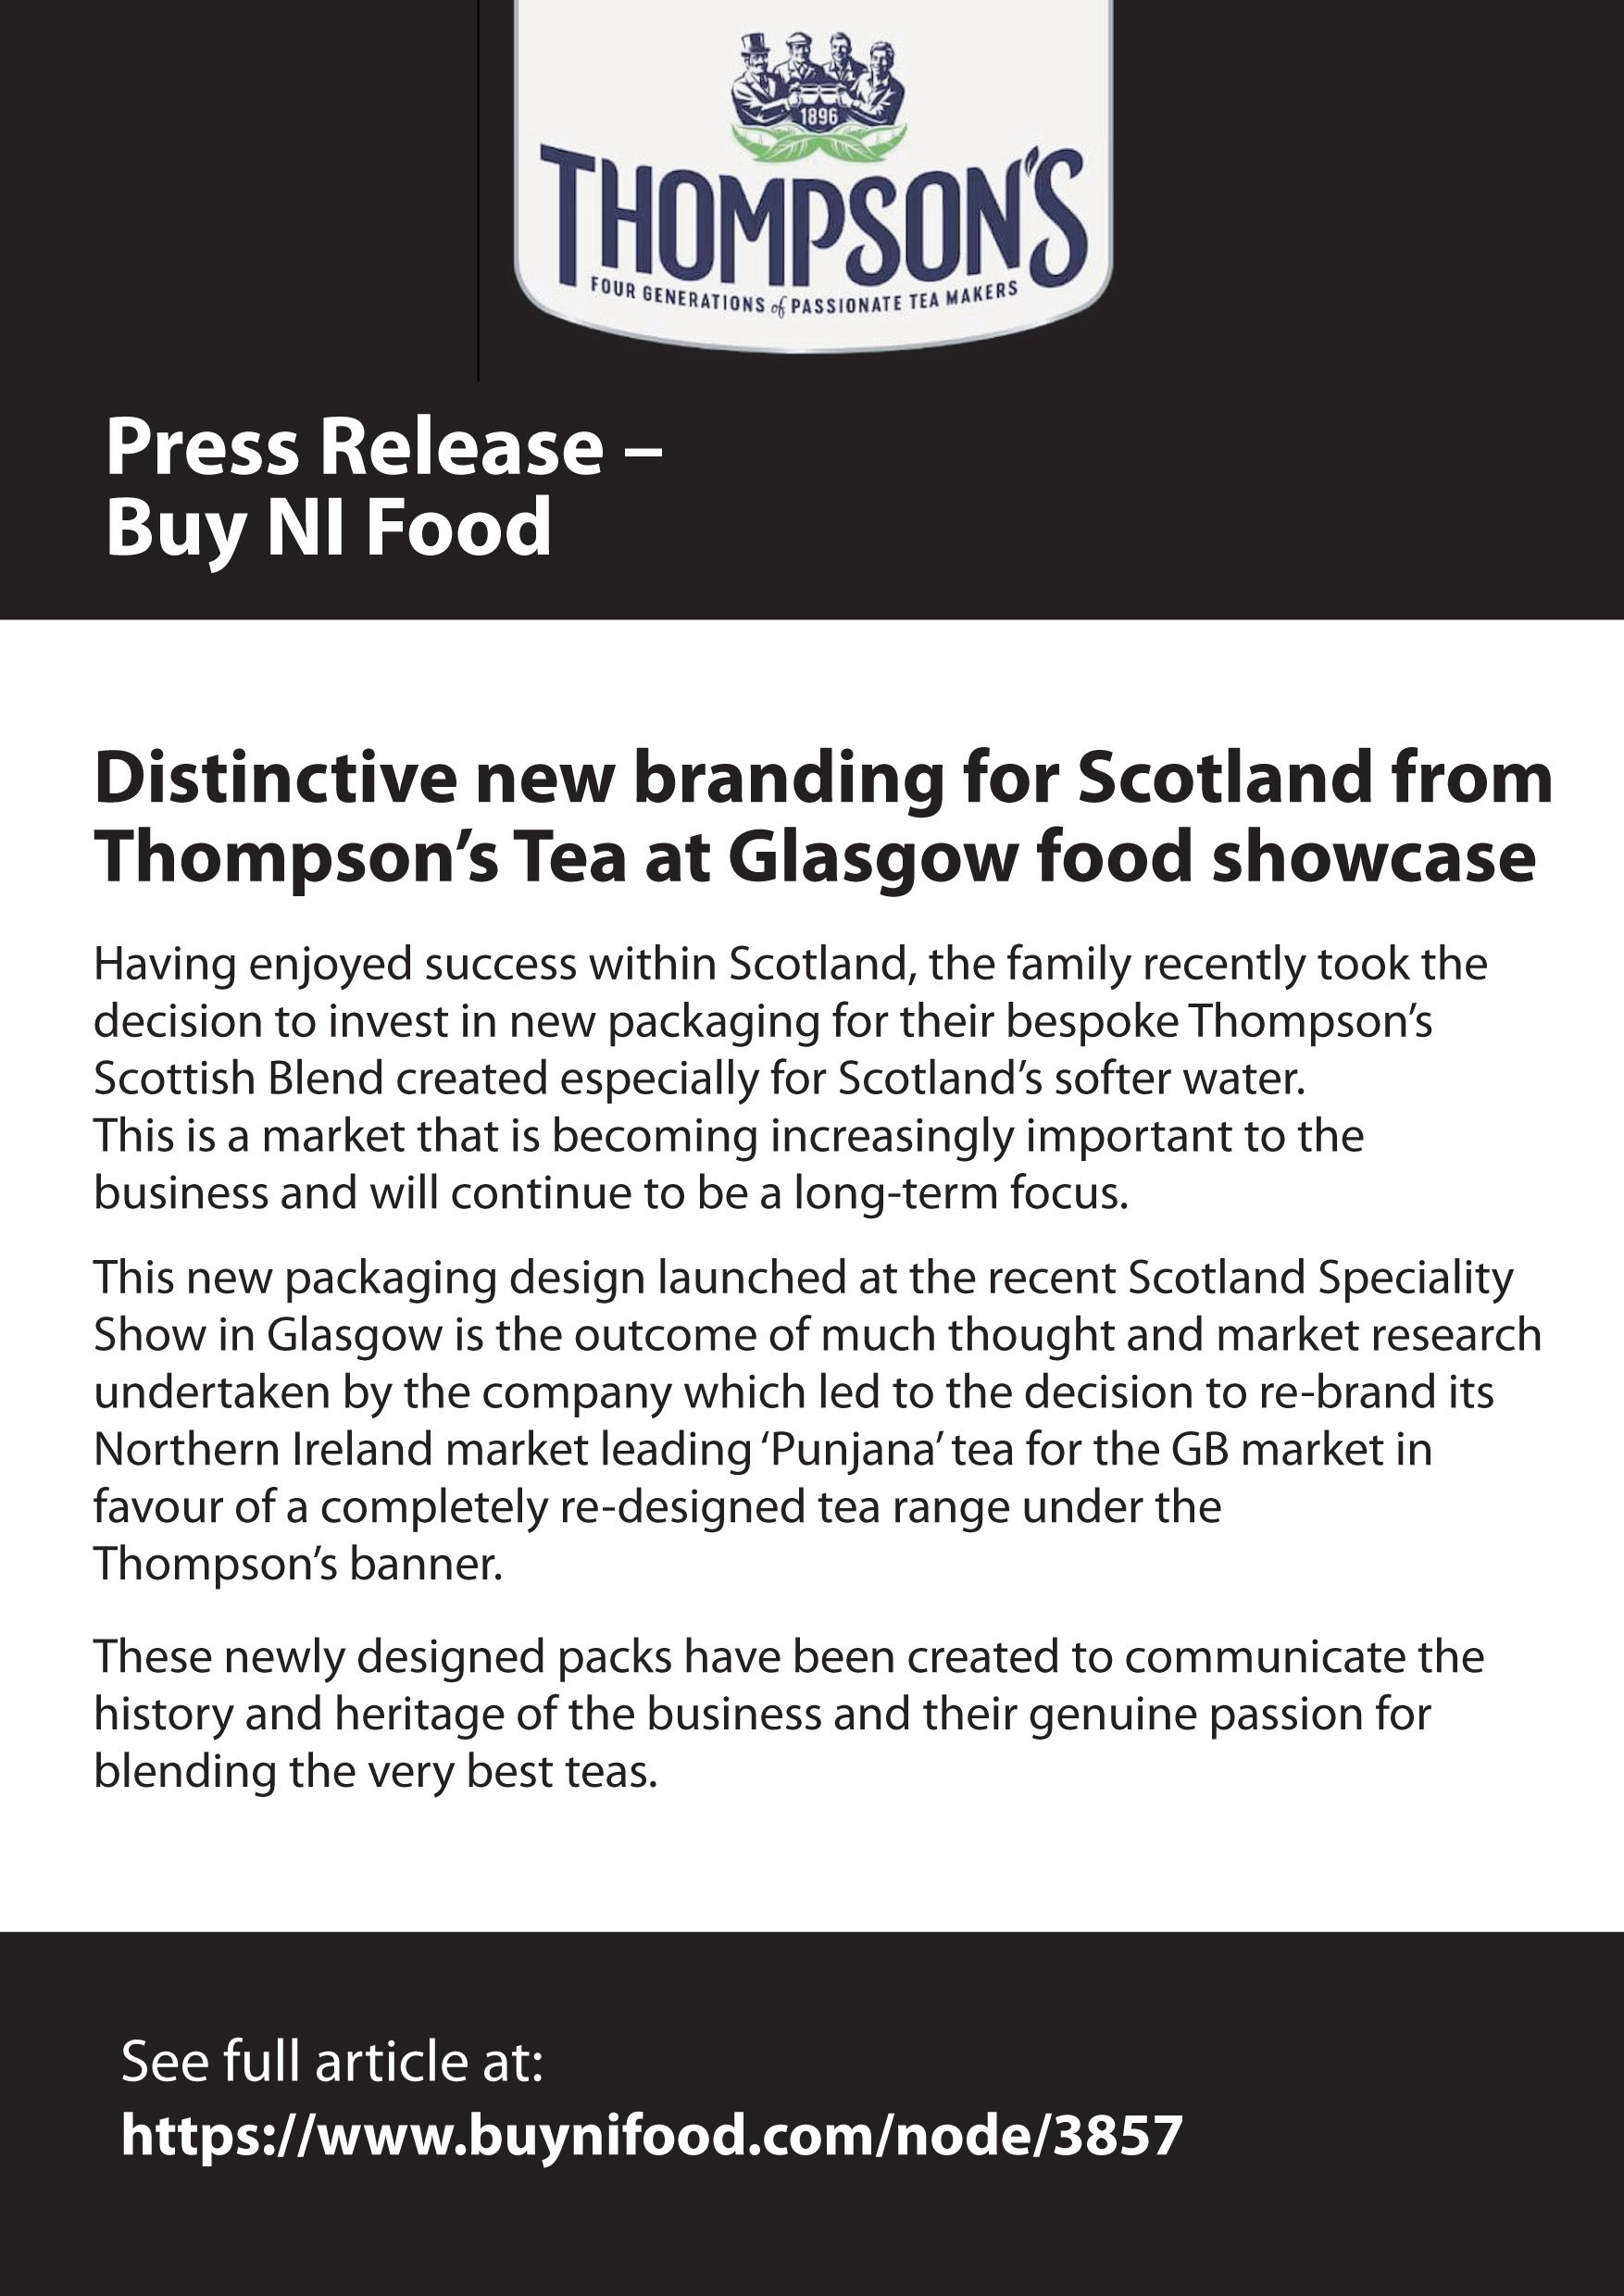 Distinctive new branding for Scotland from Thompson’s Tea at Glasgow food showcase